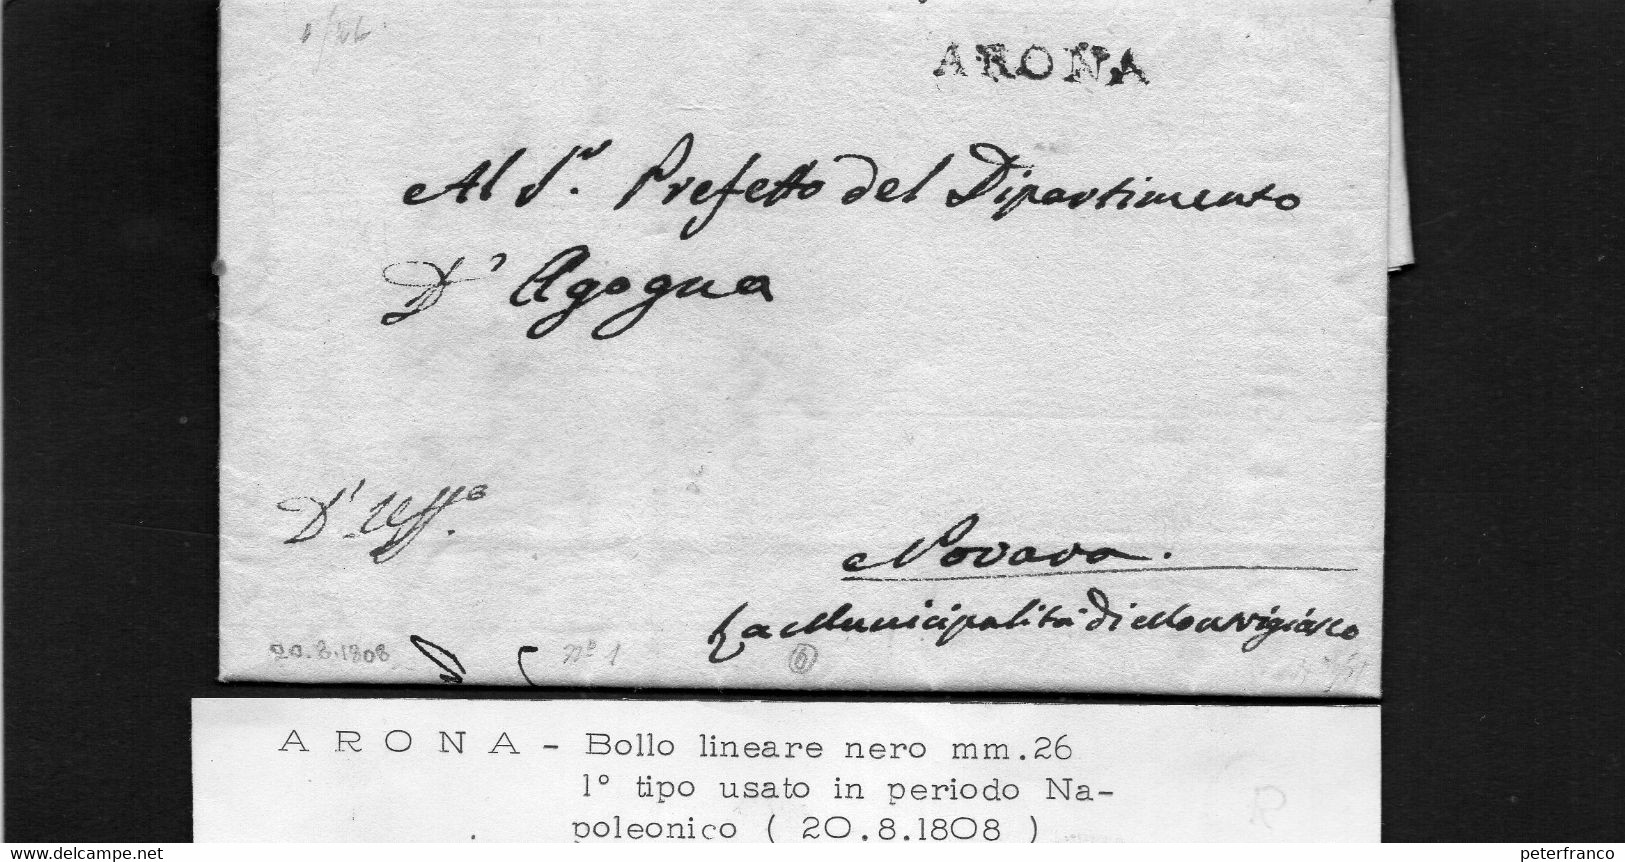 CG8 - Regno D'Italia Dip. Agogna - Lett. Da Montrigiasco X Novara 20/8/1808  - Ann. Di Arona Lin. Nero - 1. ...-1850 Prefilatelia